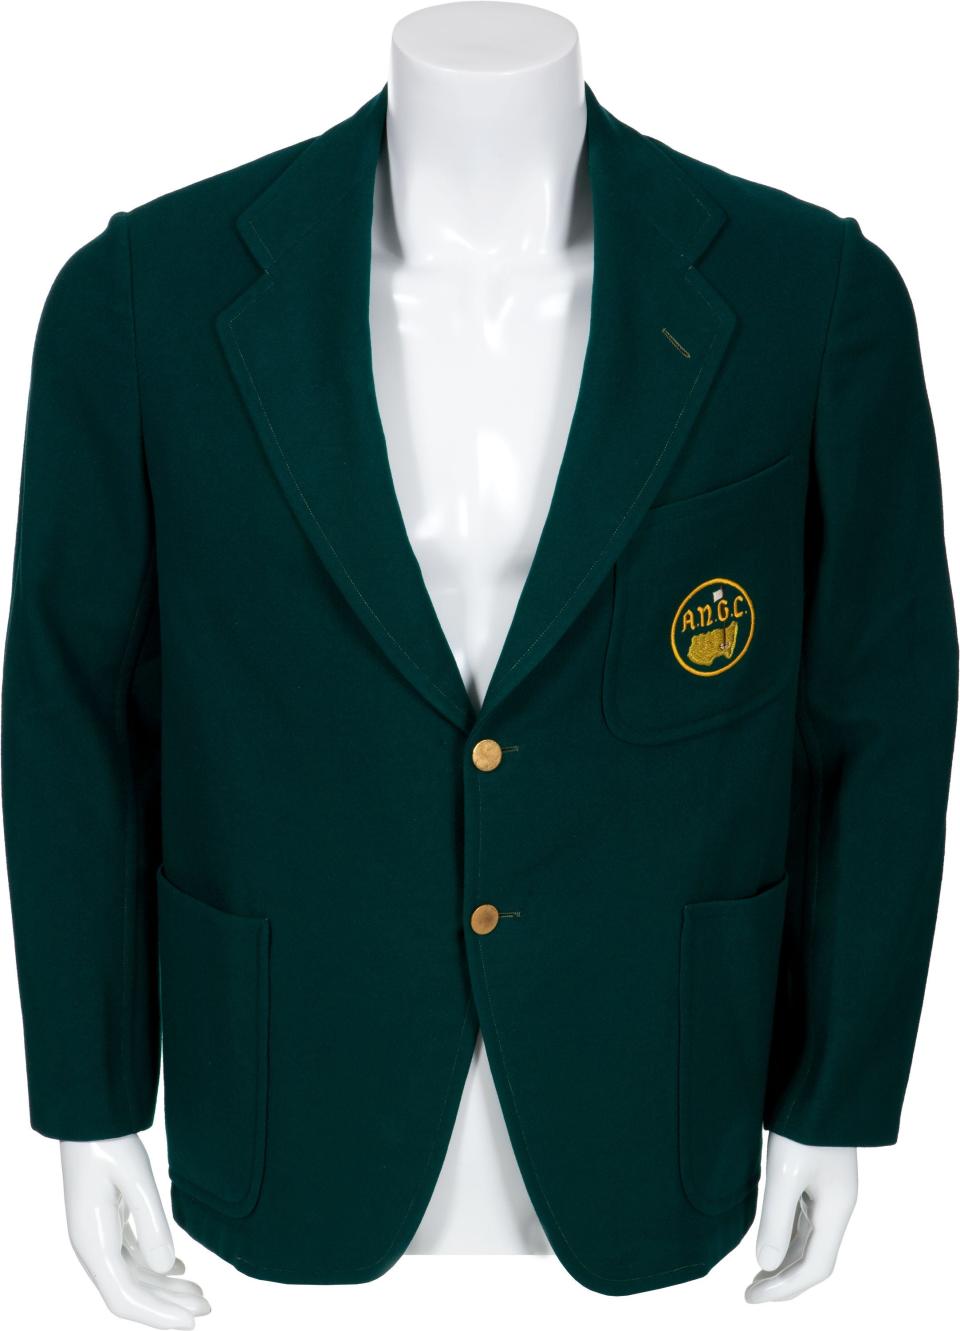 1937 Bobby Jones' personal green jacket